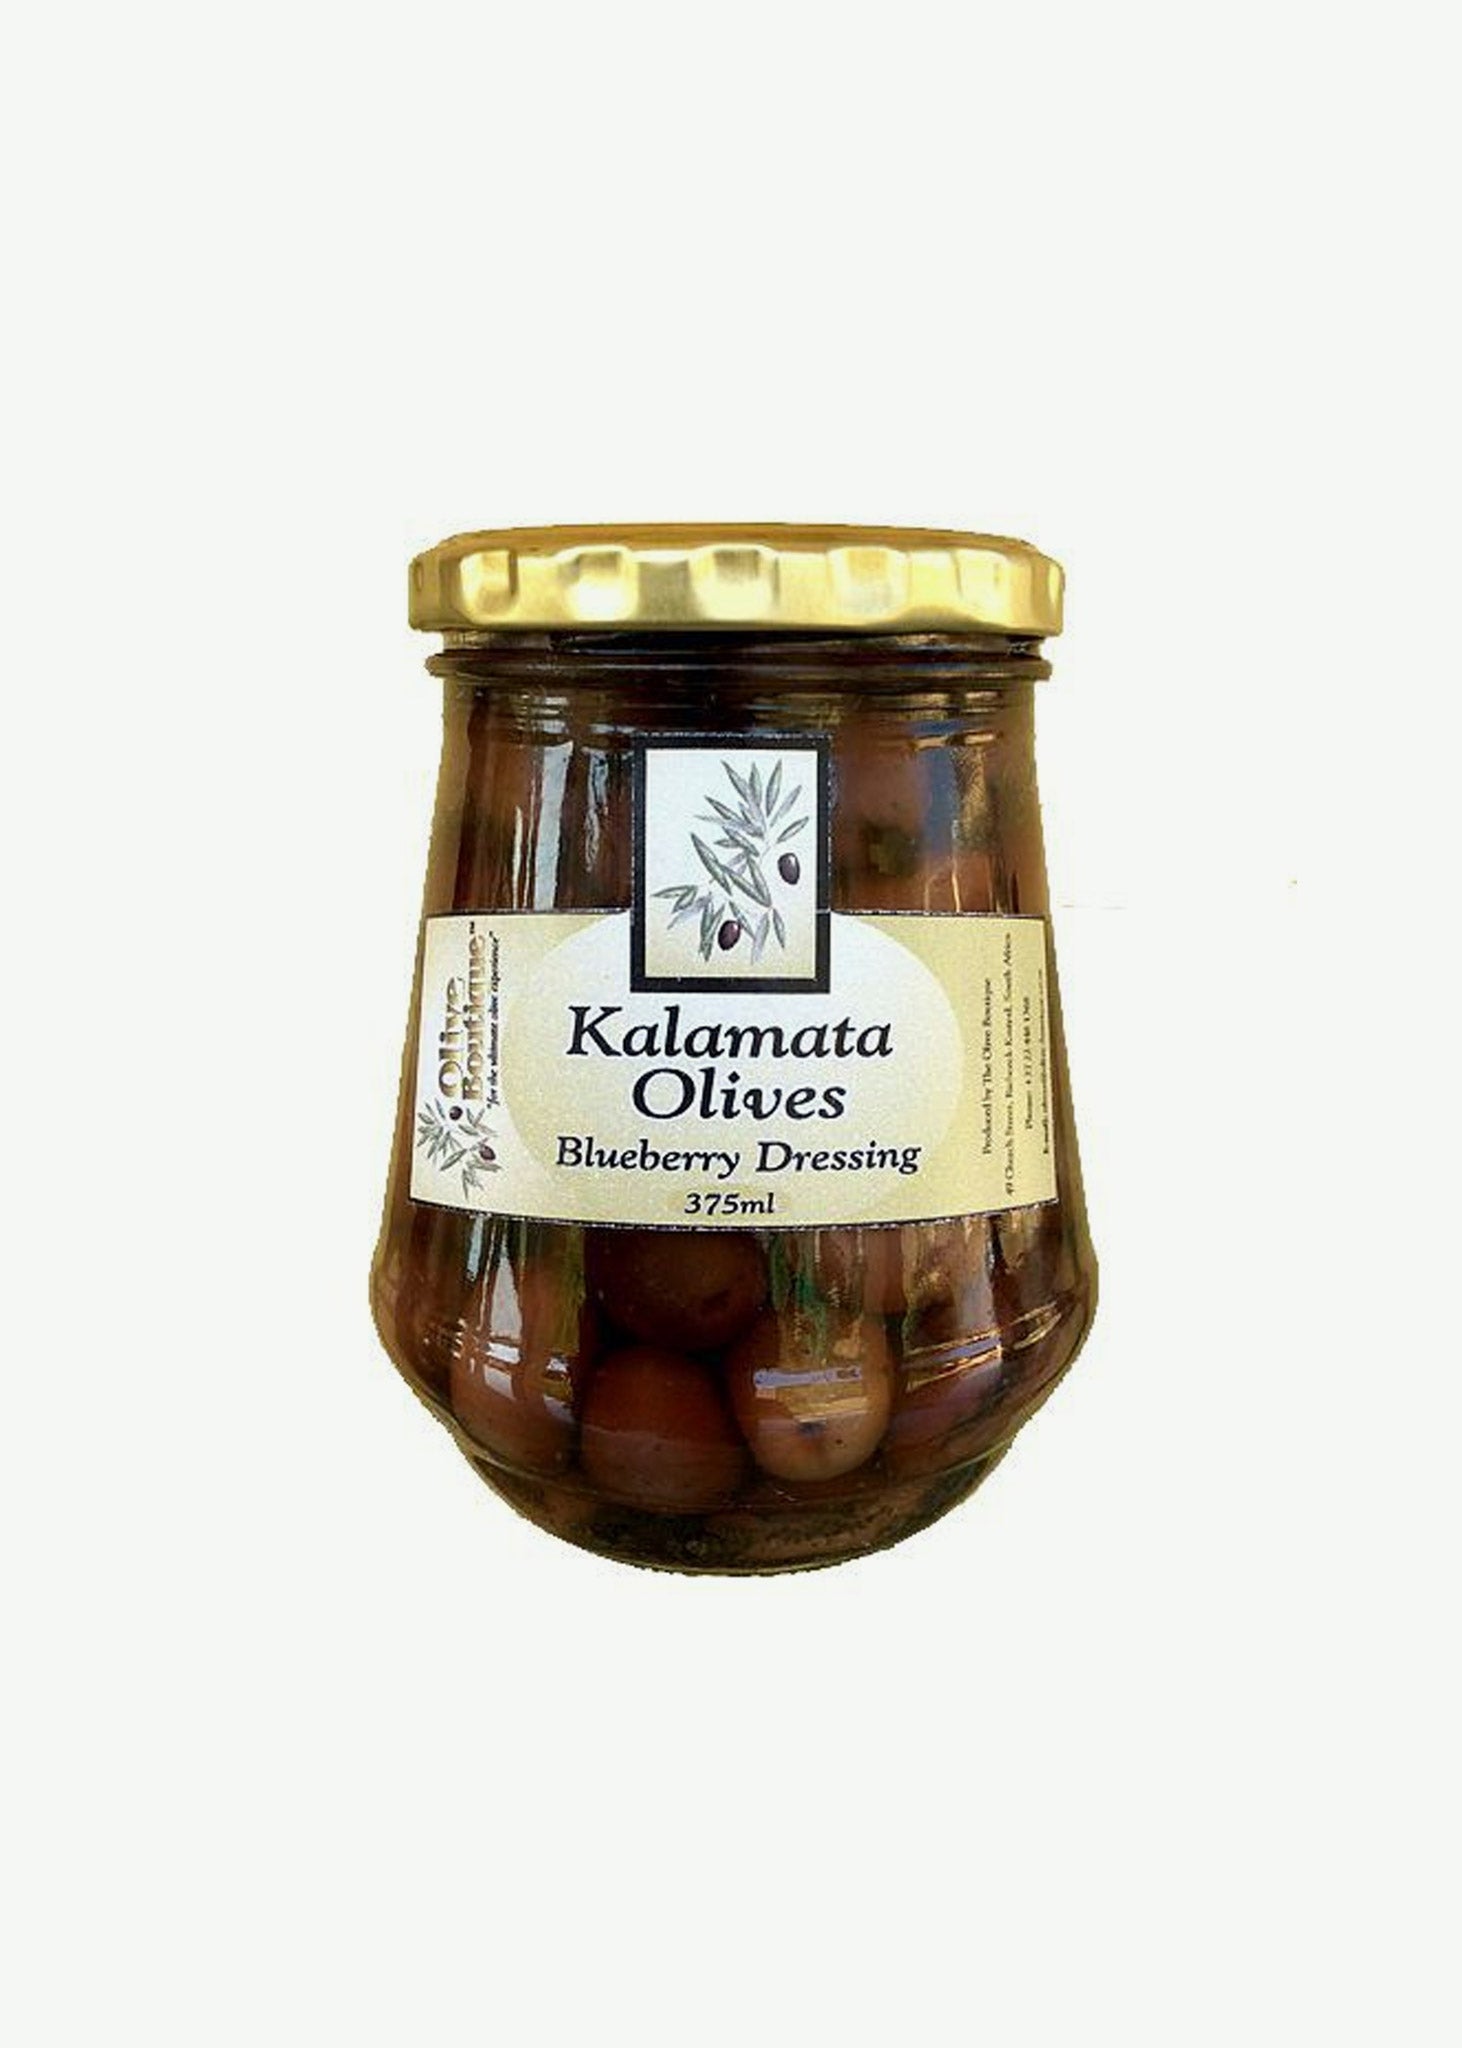 Kalamata Olives in Blueberry Dressing 375ml